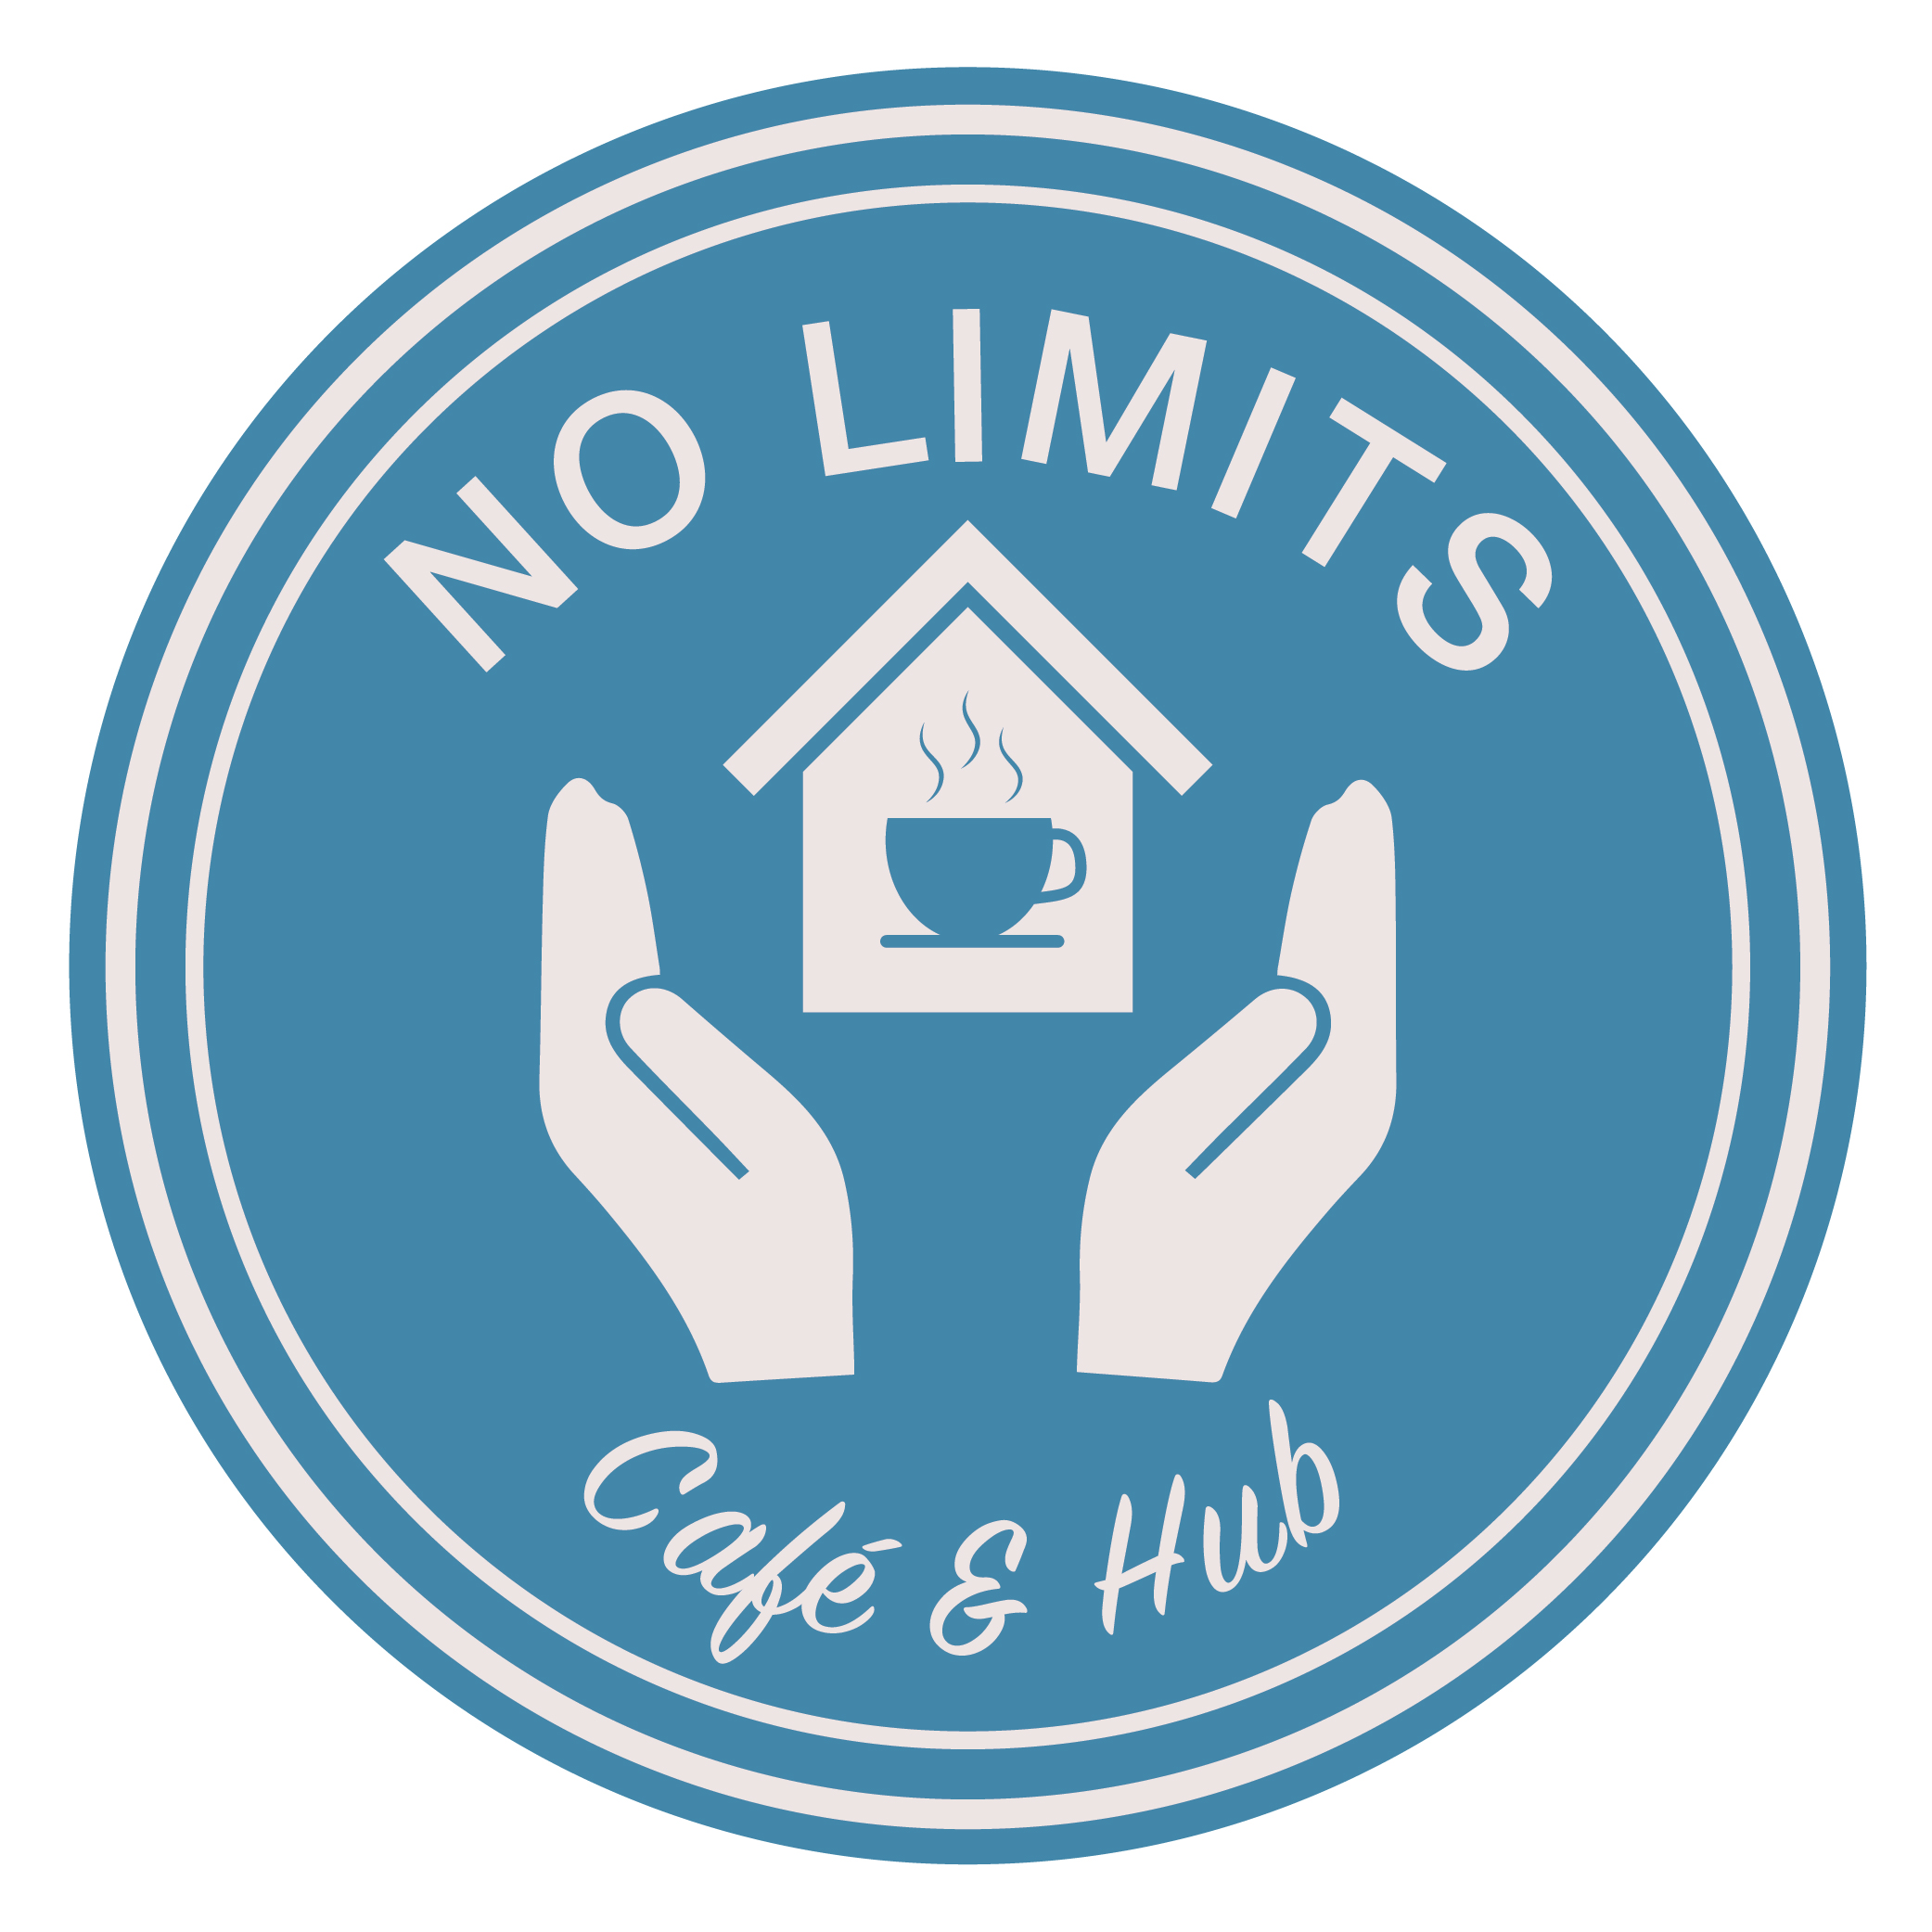 No Limits Community Cafe & Hub logo